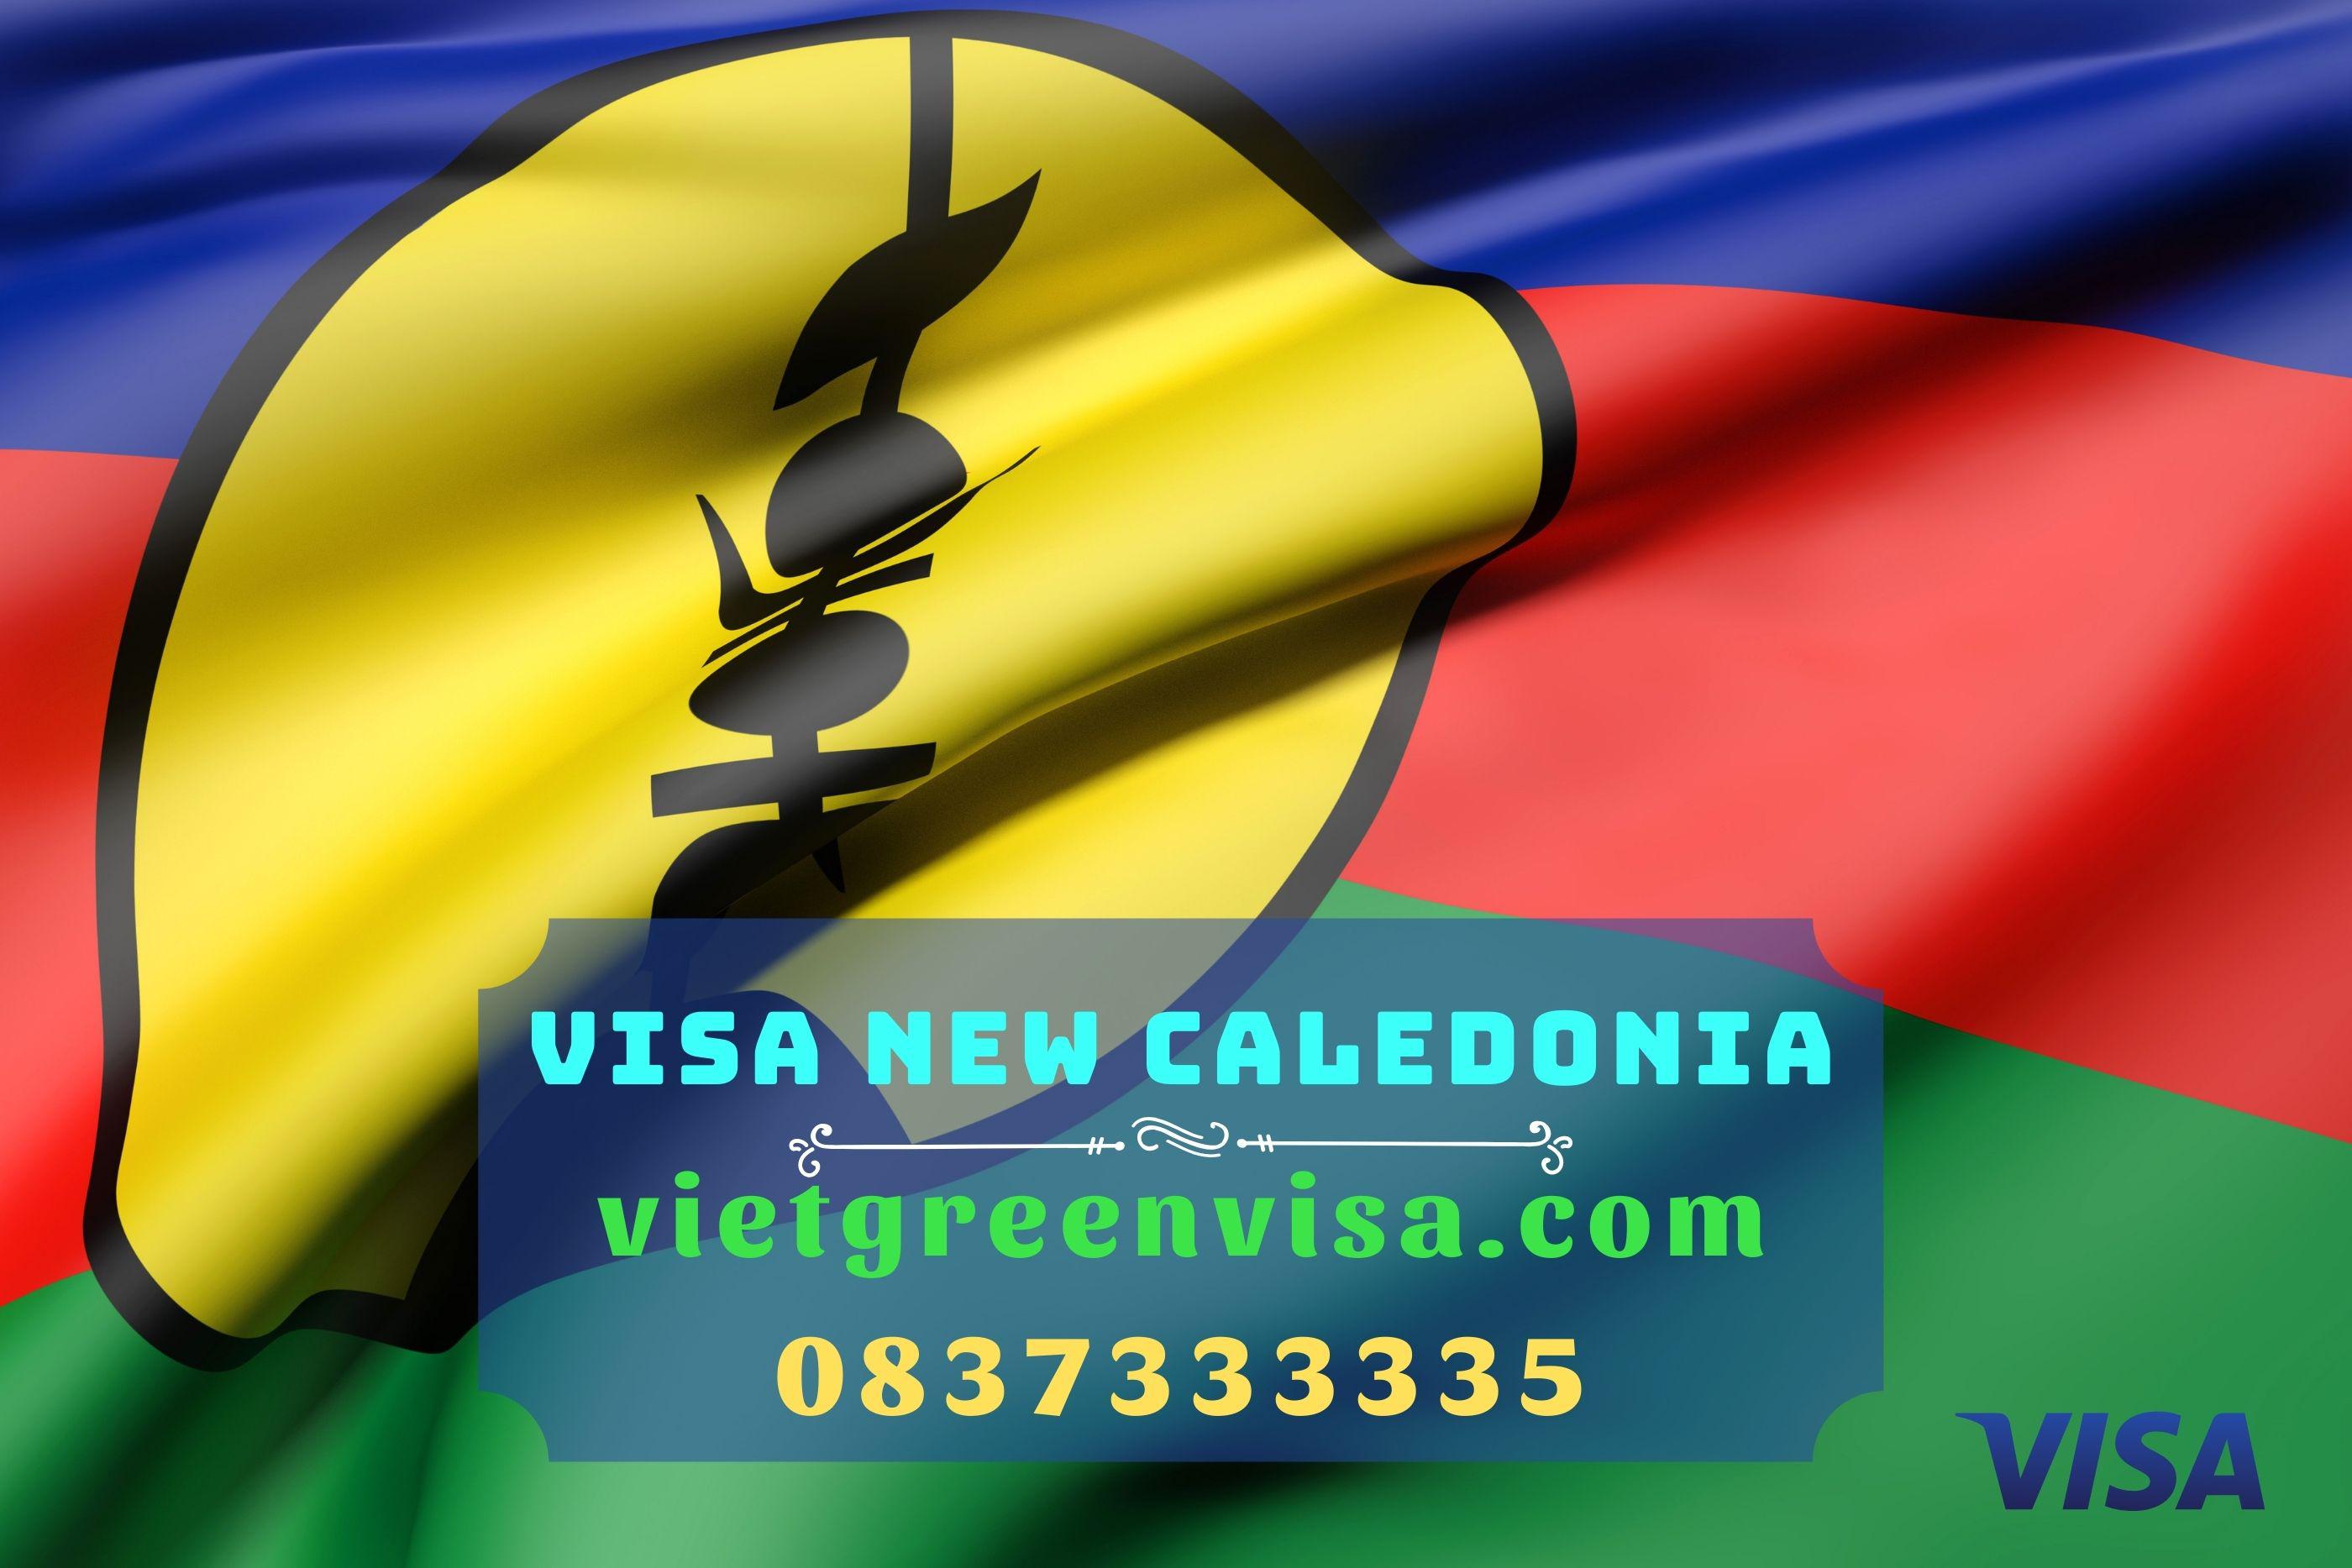 Kinh nghiệm xin visa New Caledonia từ A-Z